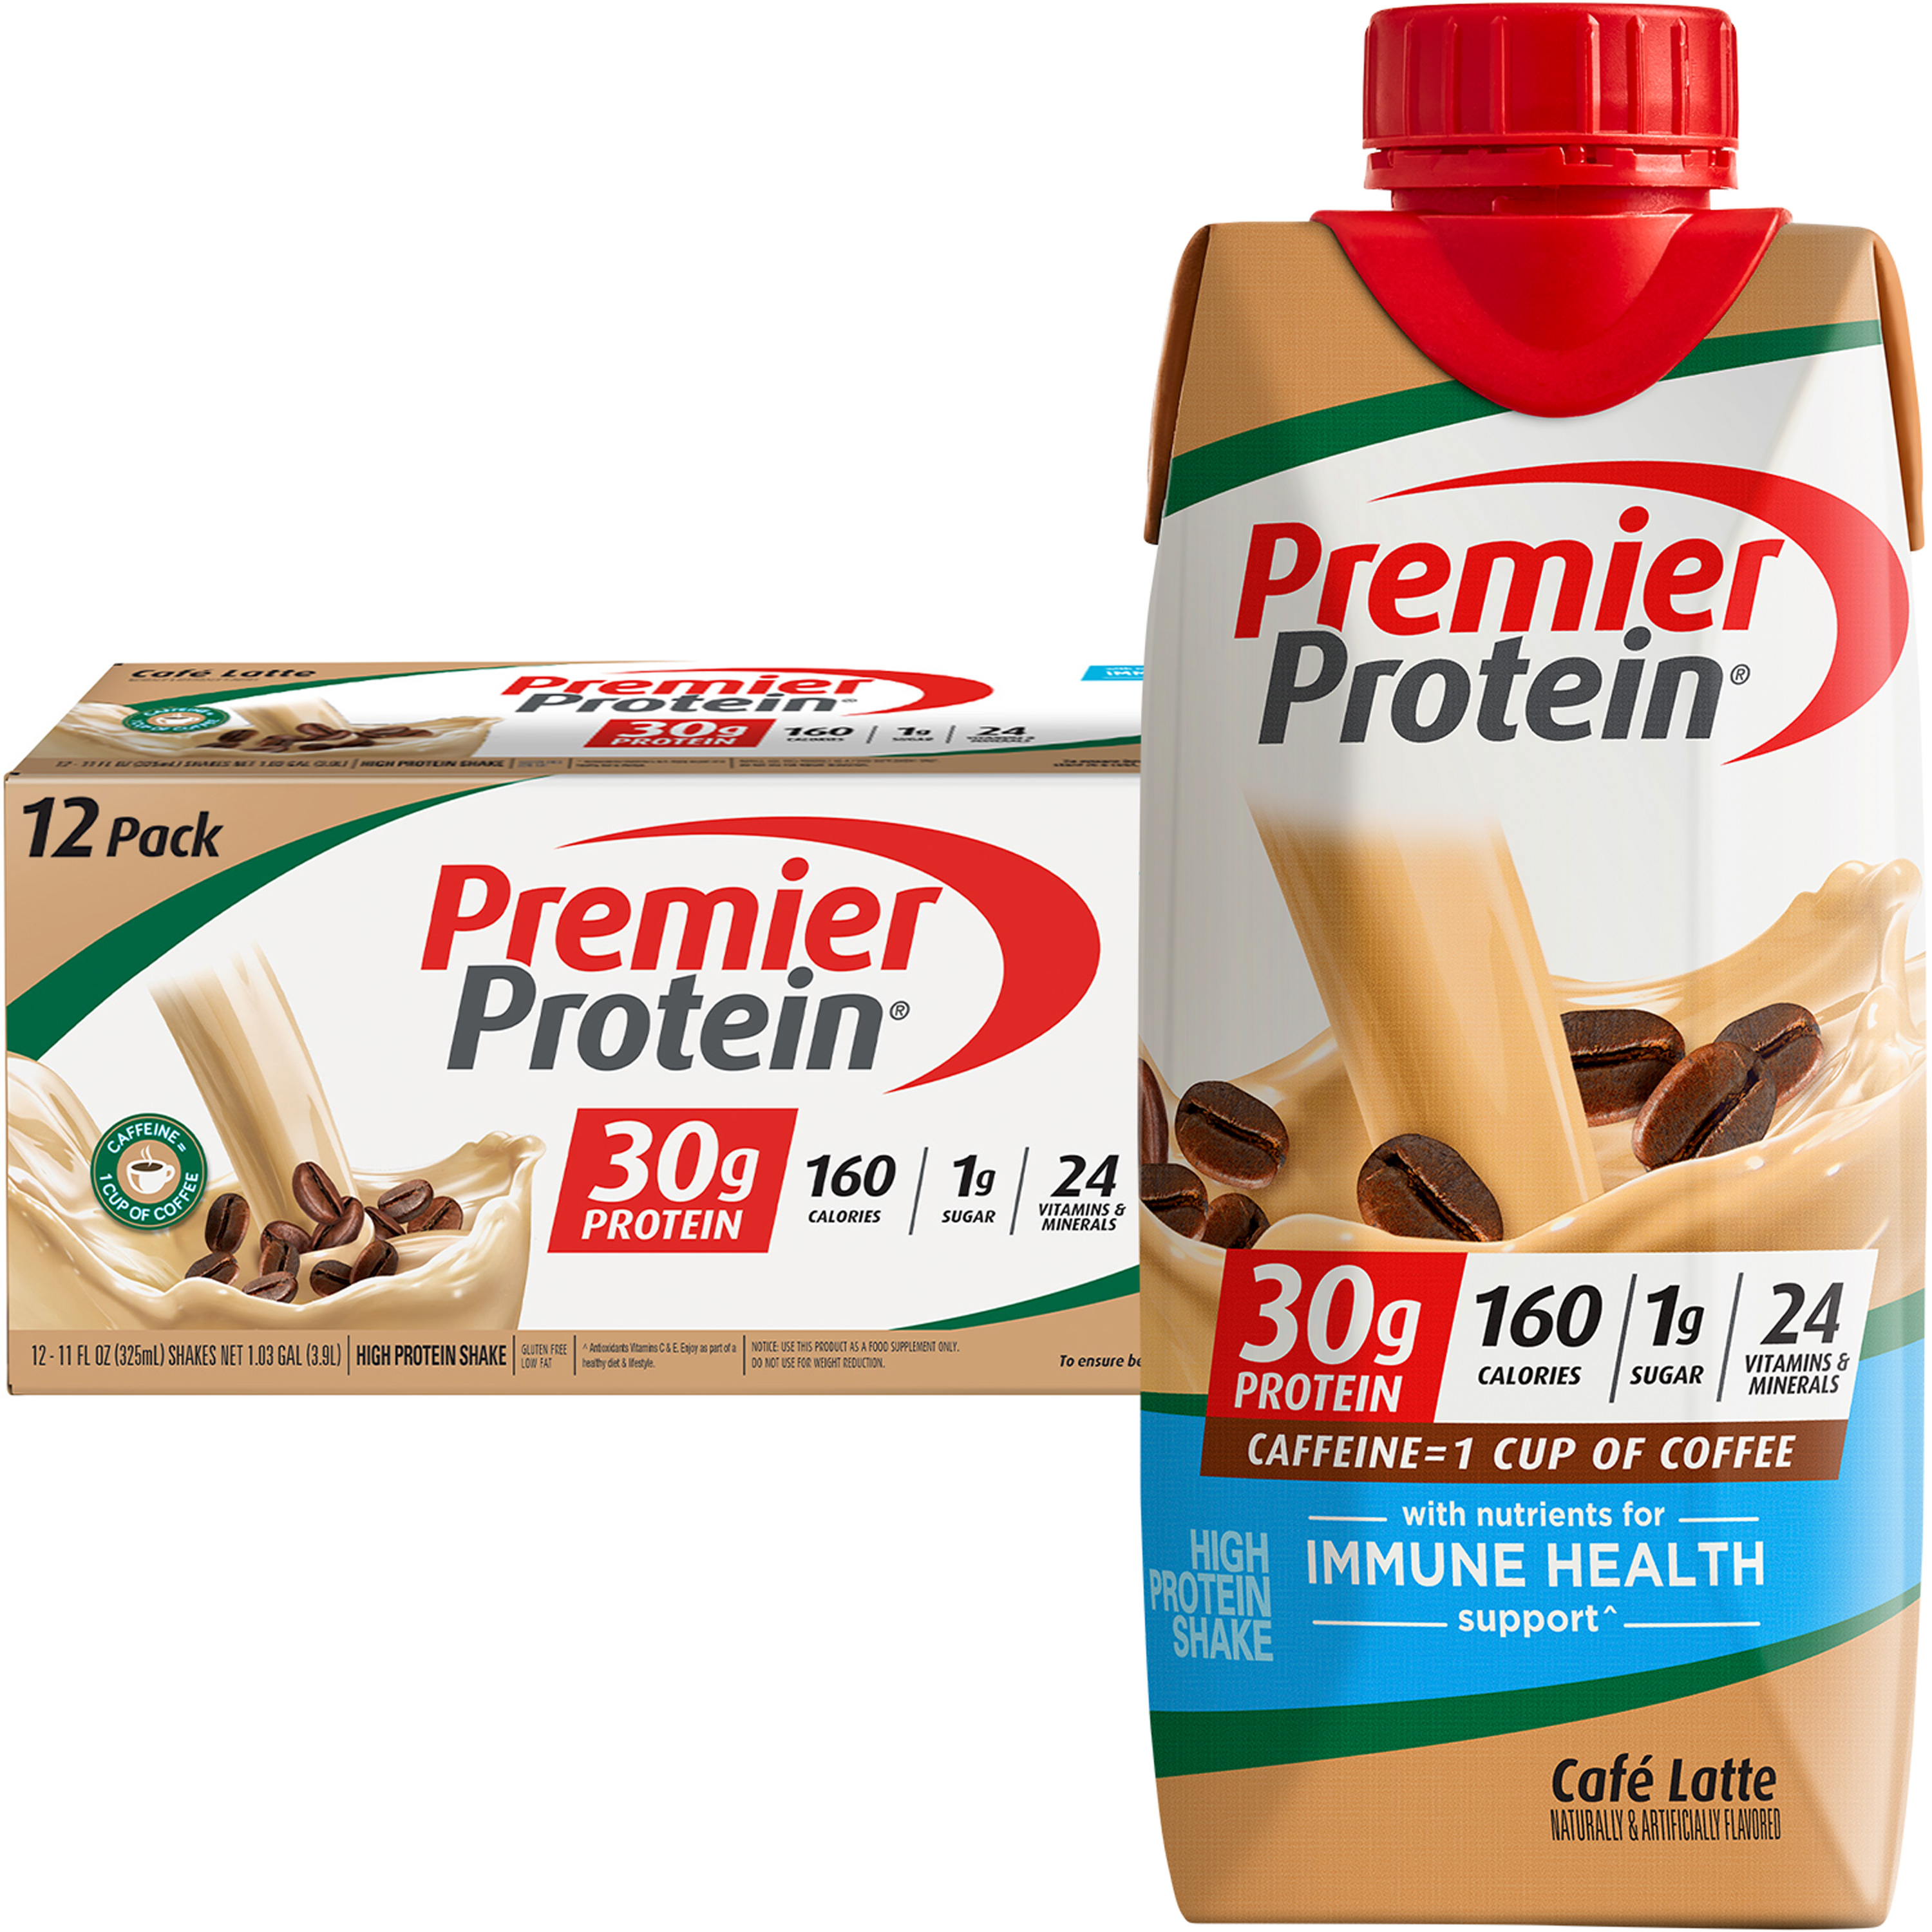 Premier Protein Shake, Café Latte, 30g Protein, 11 fl oz, 12 Ct - image 1 of 8